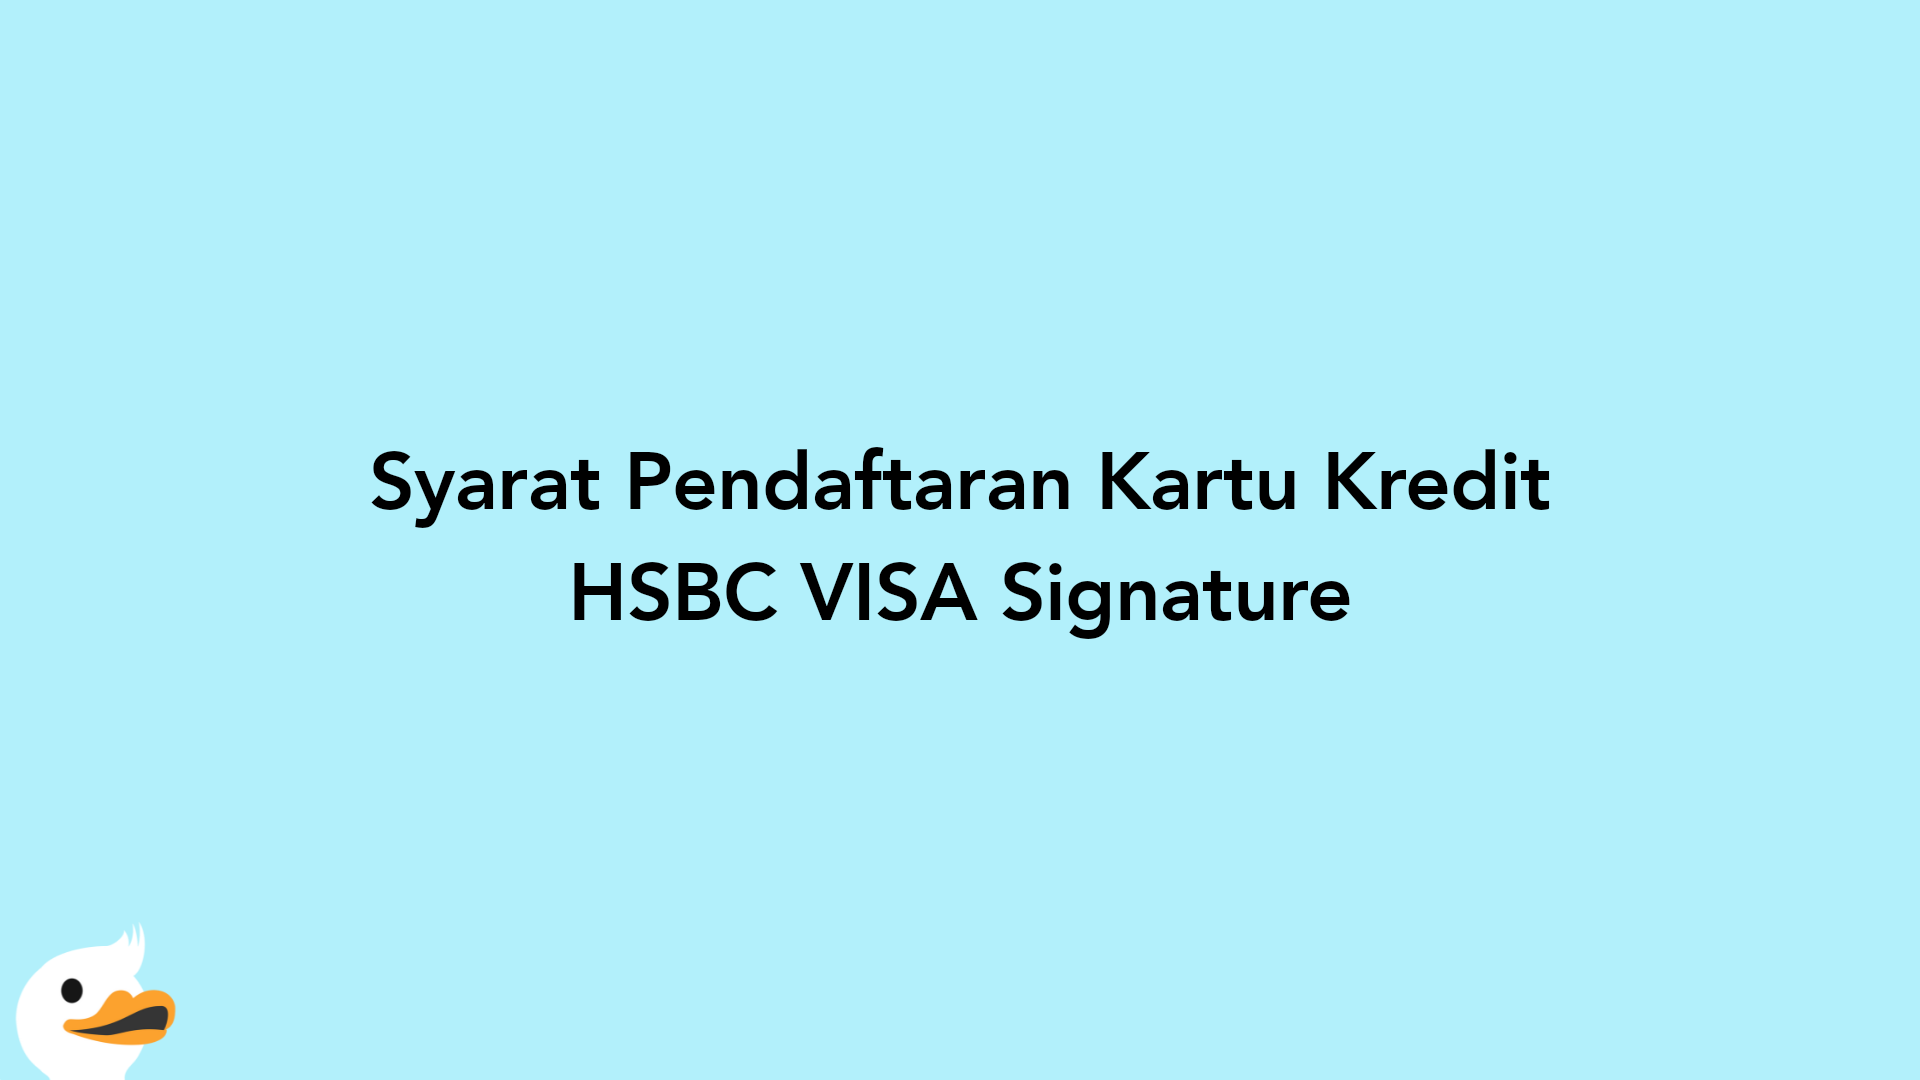 Syarat Pendaftaran Kartu Kredit HSBC VISA Signature